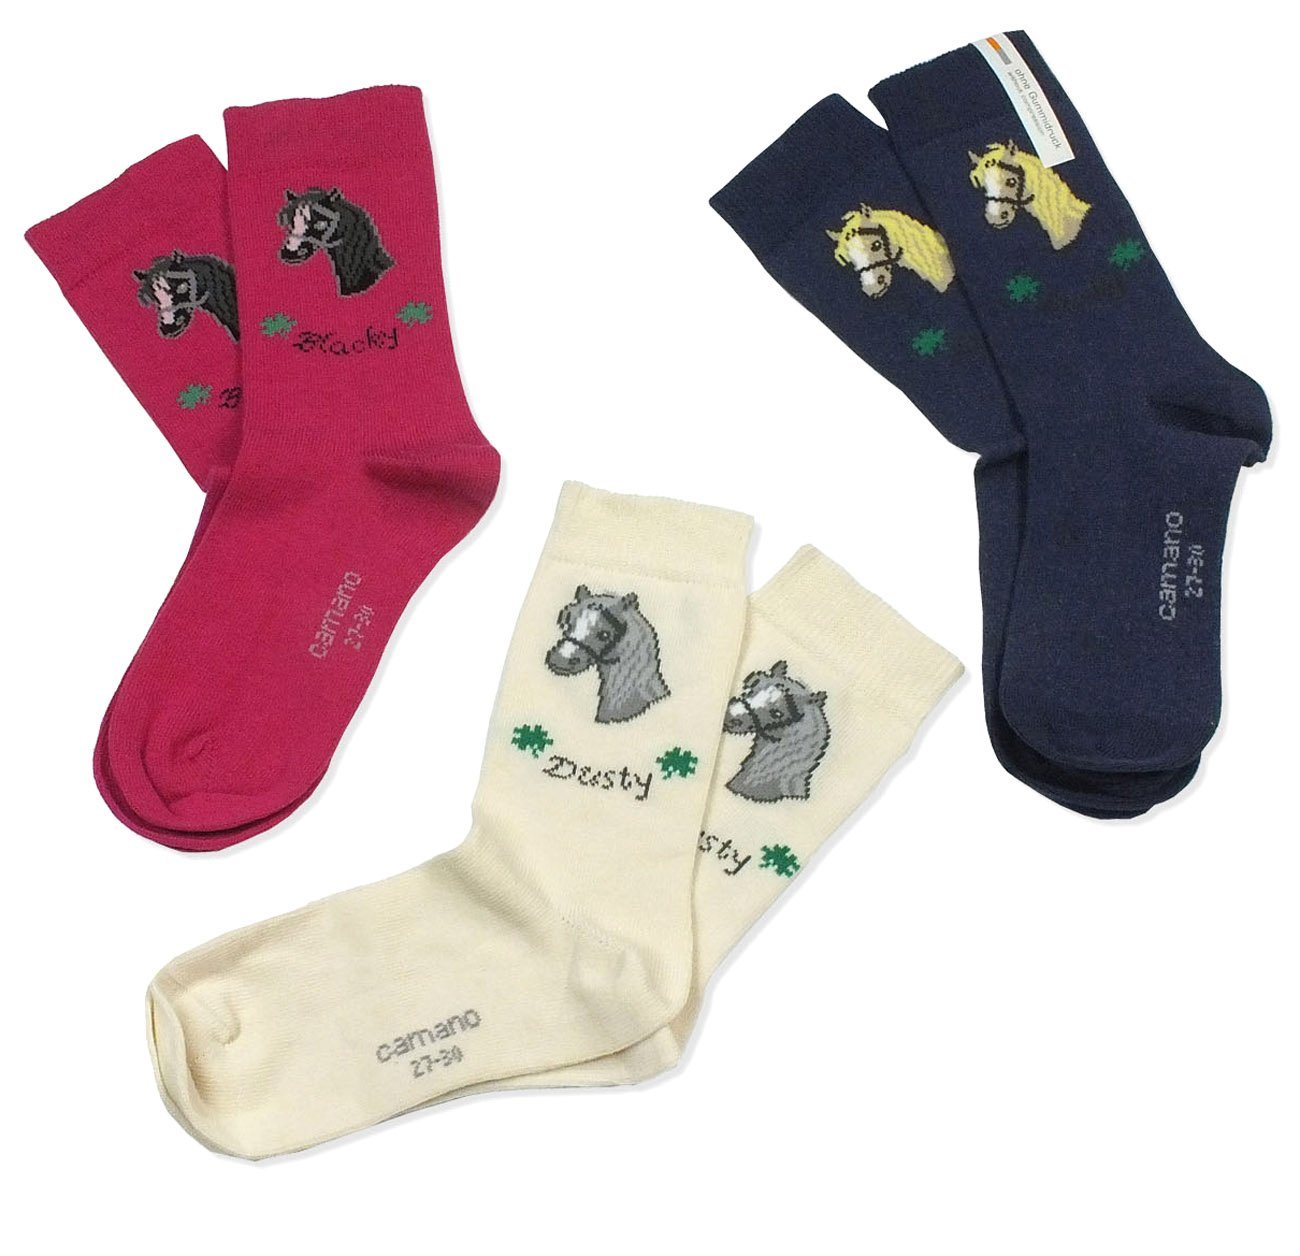 Camano Langsocken CA3814 (Packung, 3-Paar, 3 Paar) Kinder Mädchen Socken, Baumwolle, Kindersocken von Camano